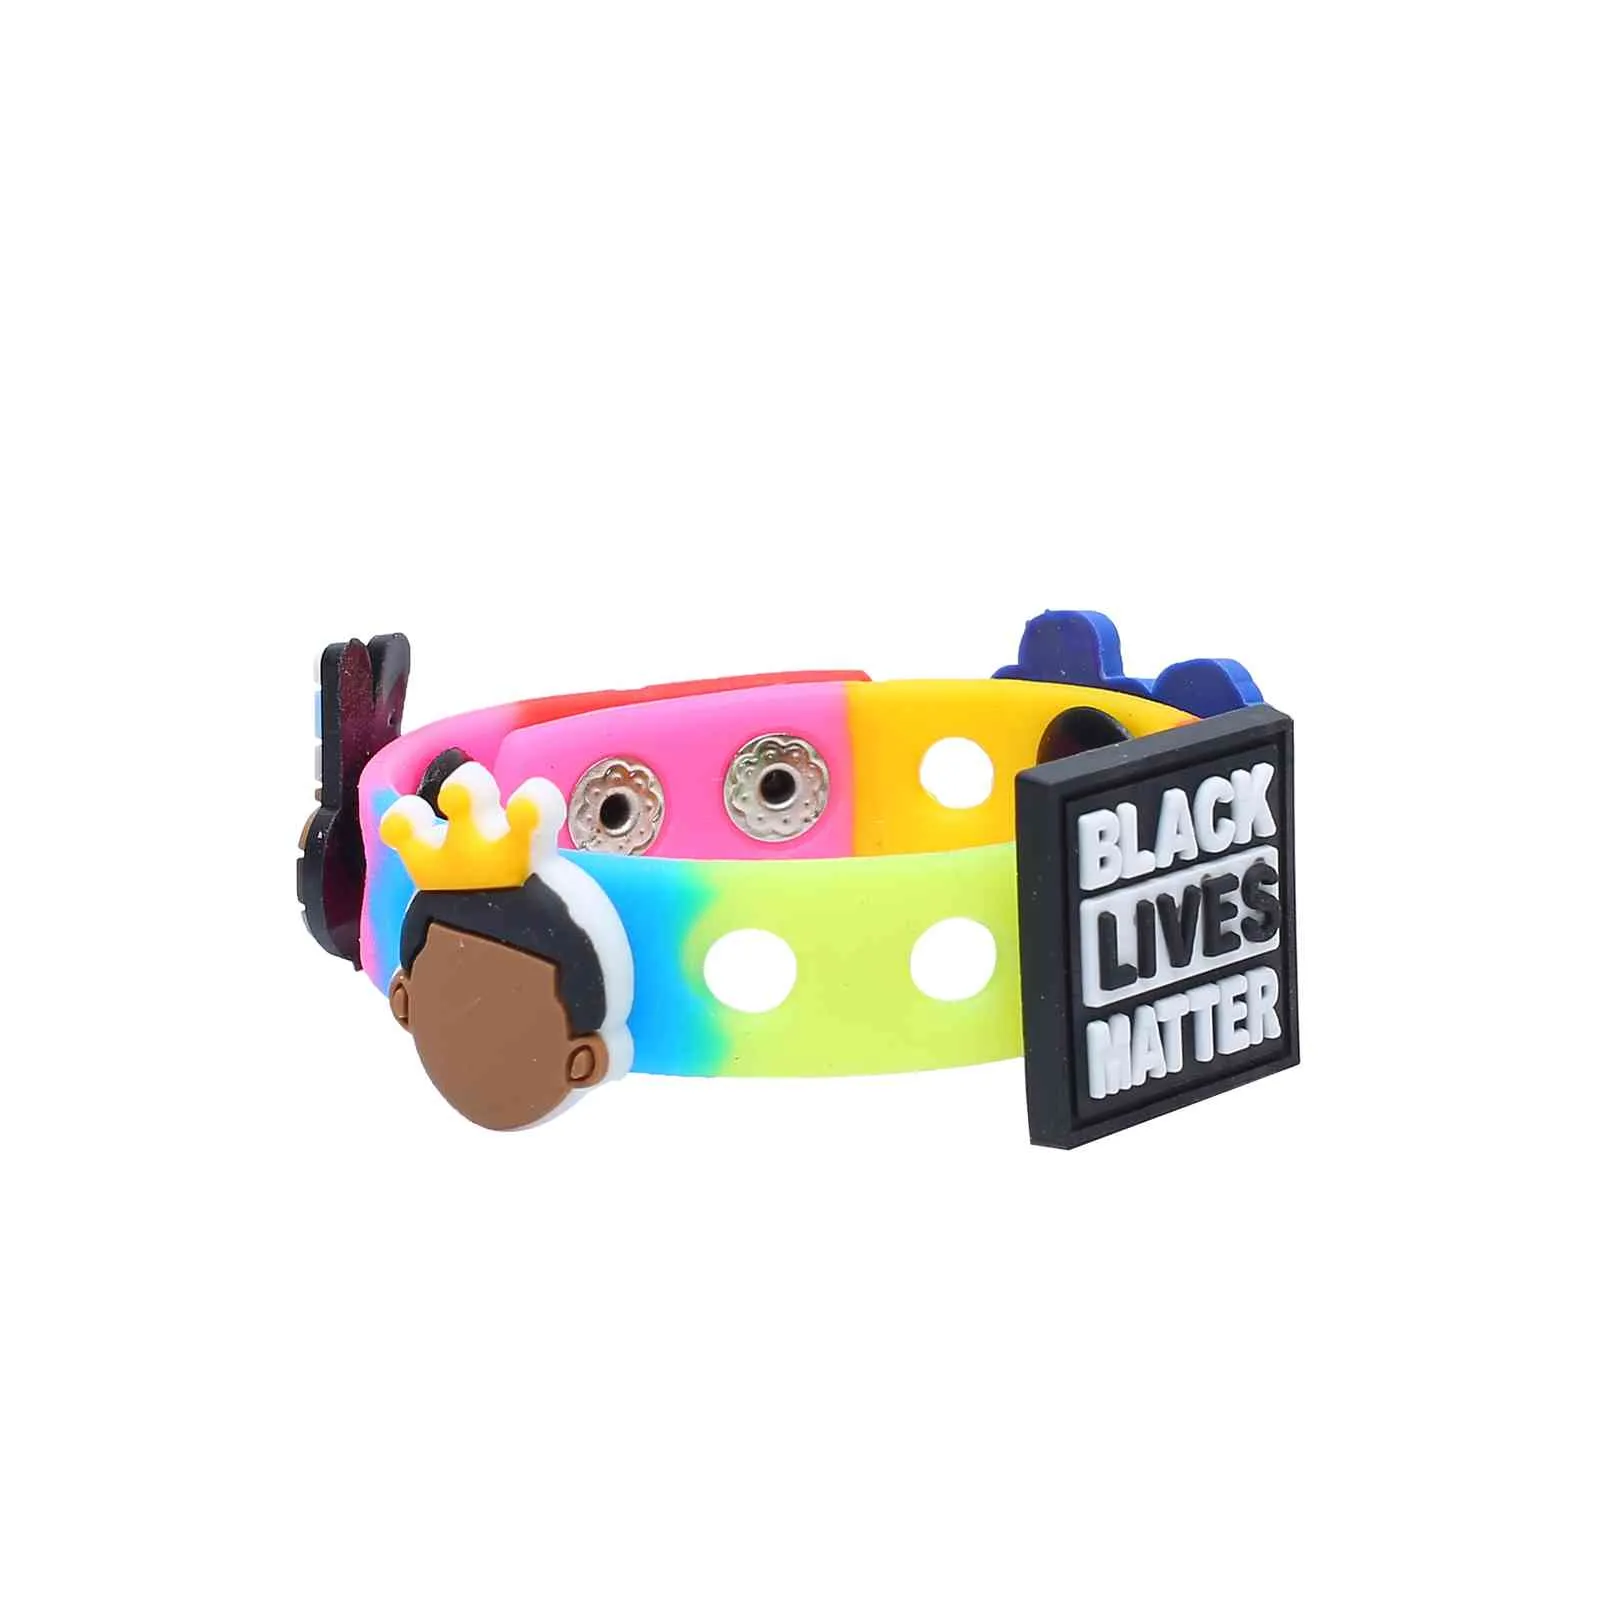 20st Random Black Lives Matter Shoe For Charms Designer Bulk Decoration Croc Accessories Fit Clog Jibz Kids Gift260U